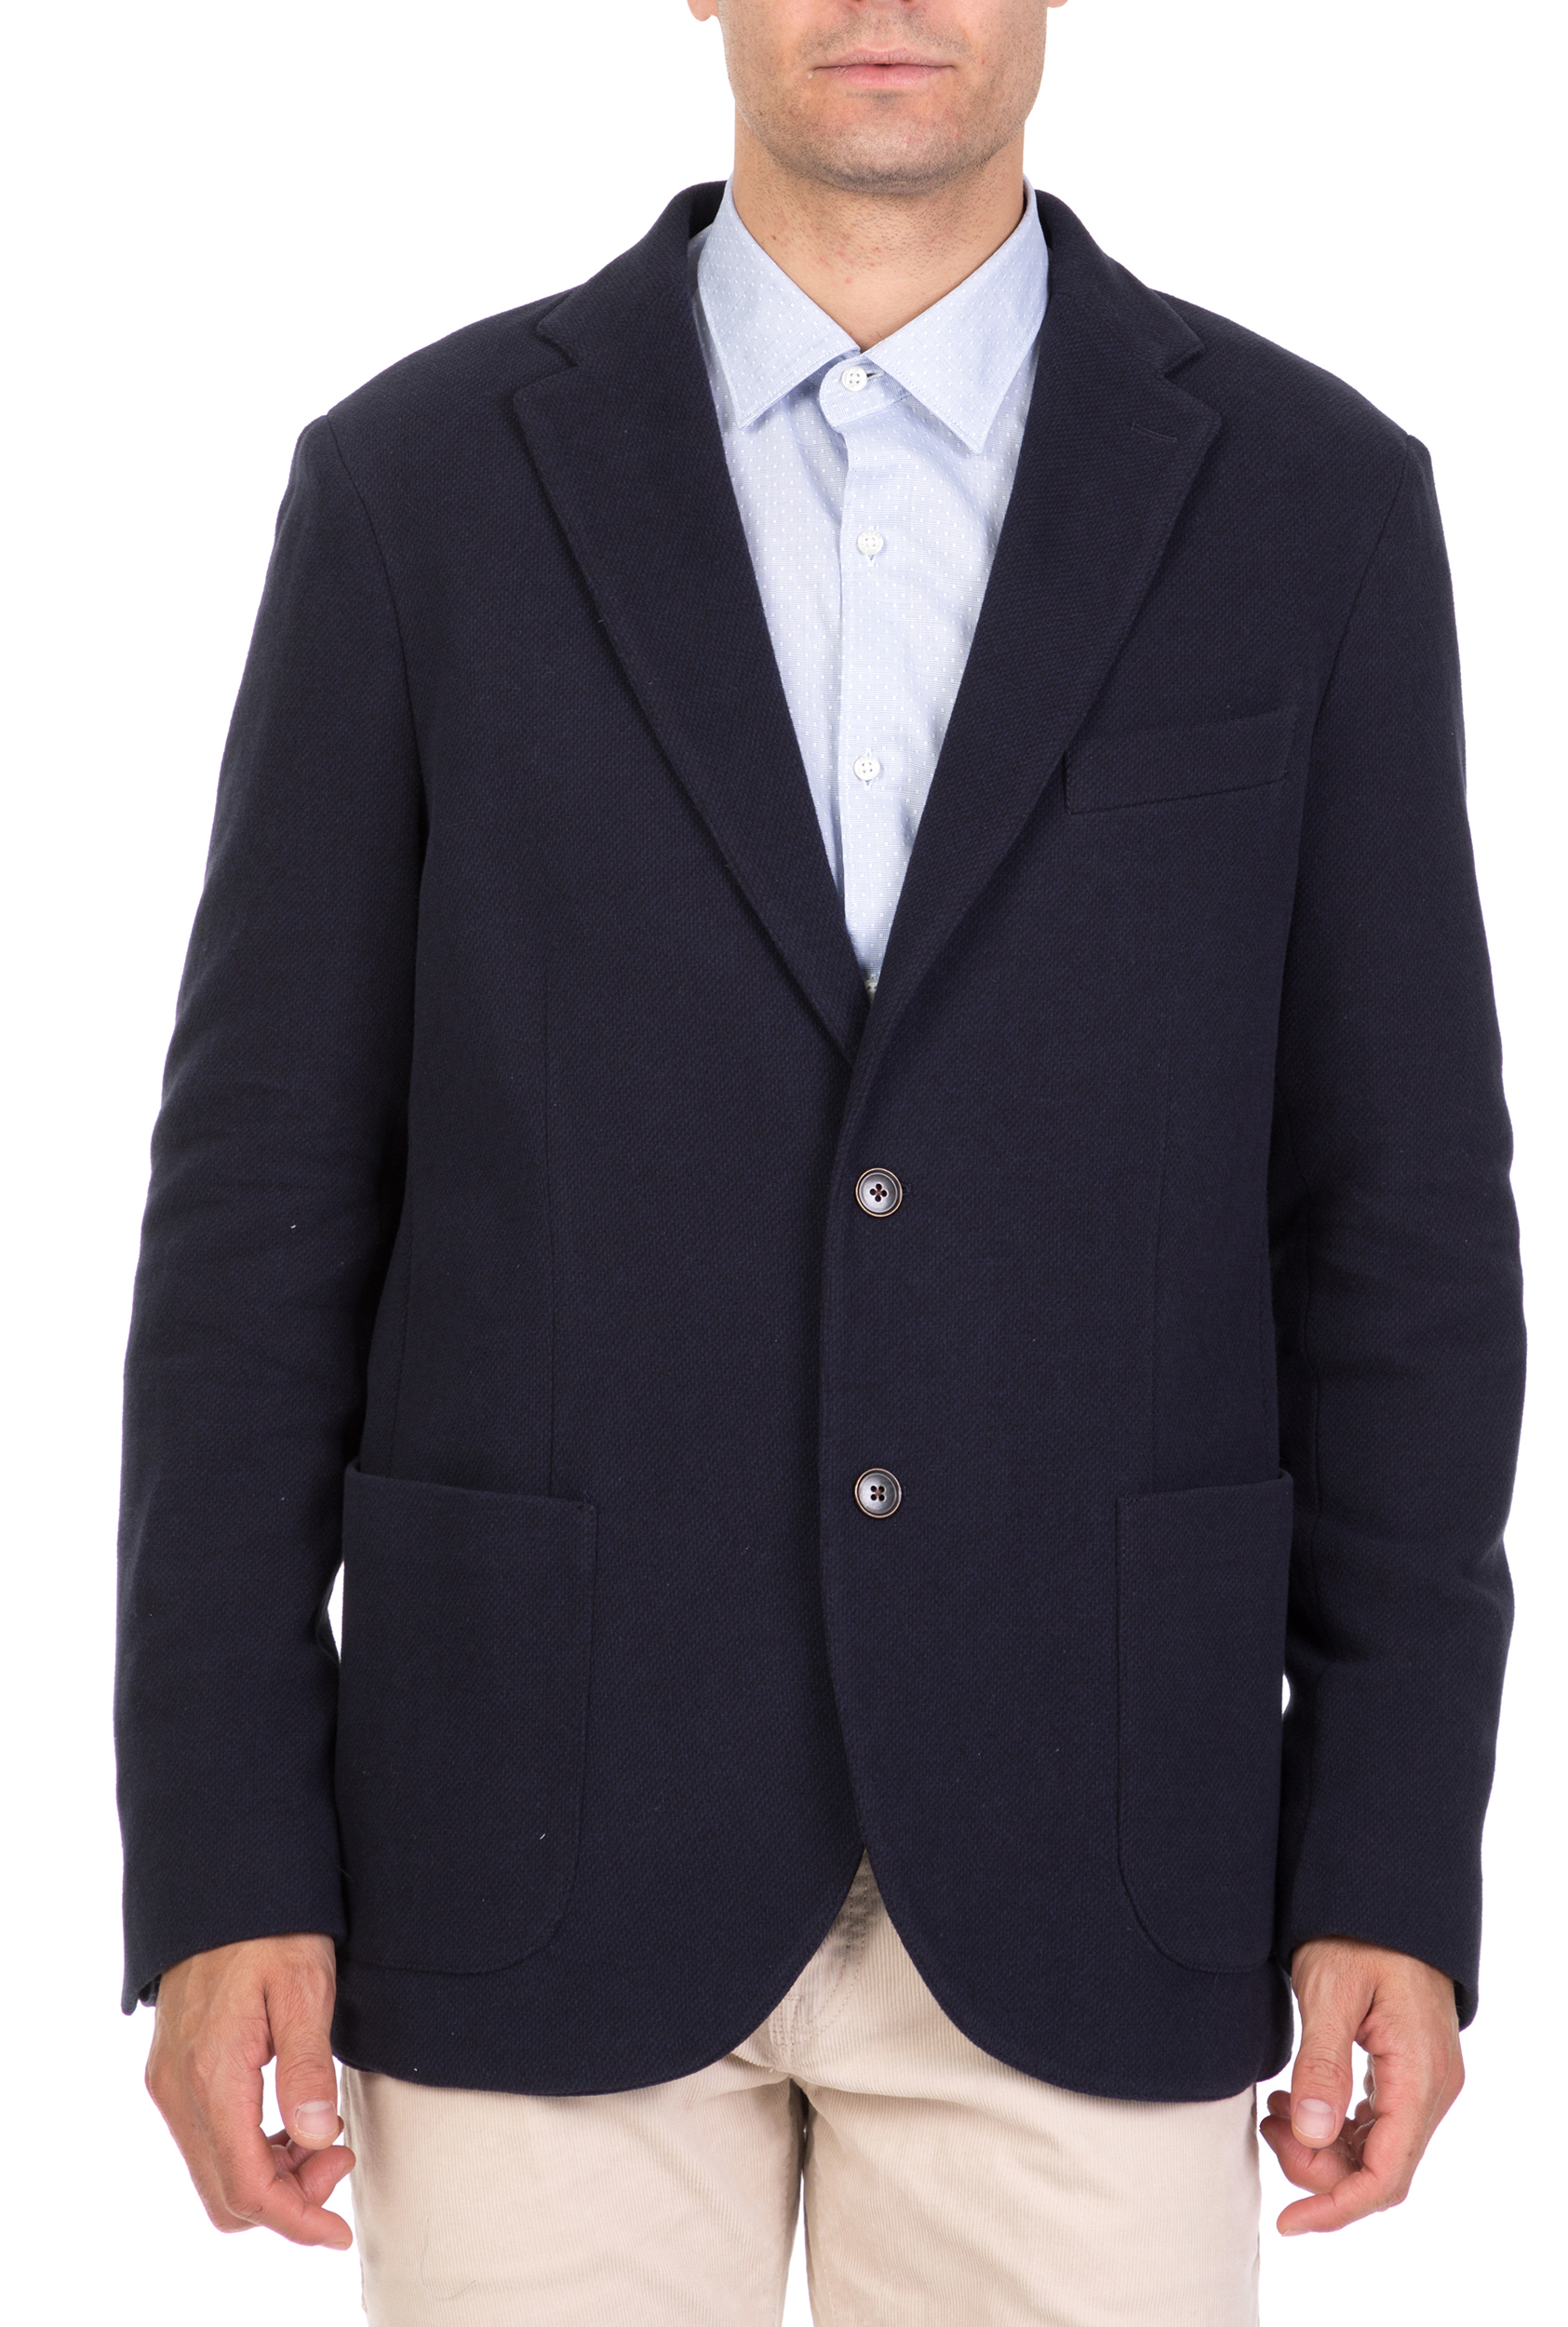 BROOKSFIELD - Ανδρικό σακάκι BROOKSFIELD μπλε Ανδρικά/Ρούχα/Πανωφόρια/Σακάκια